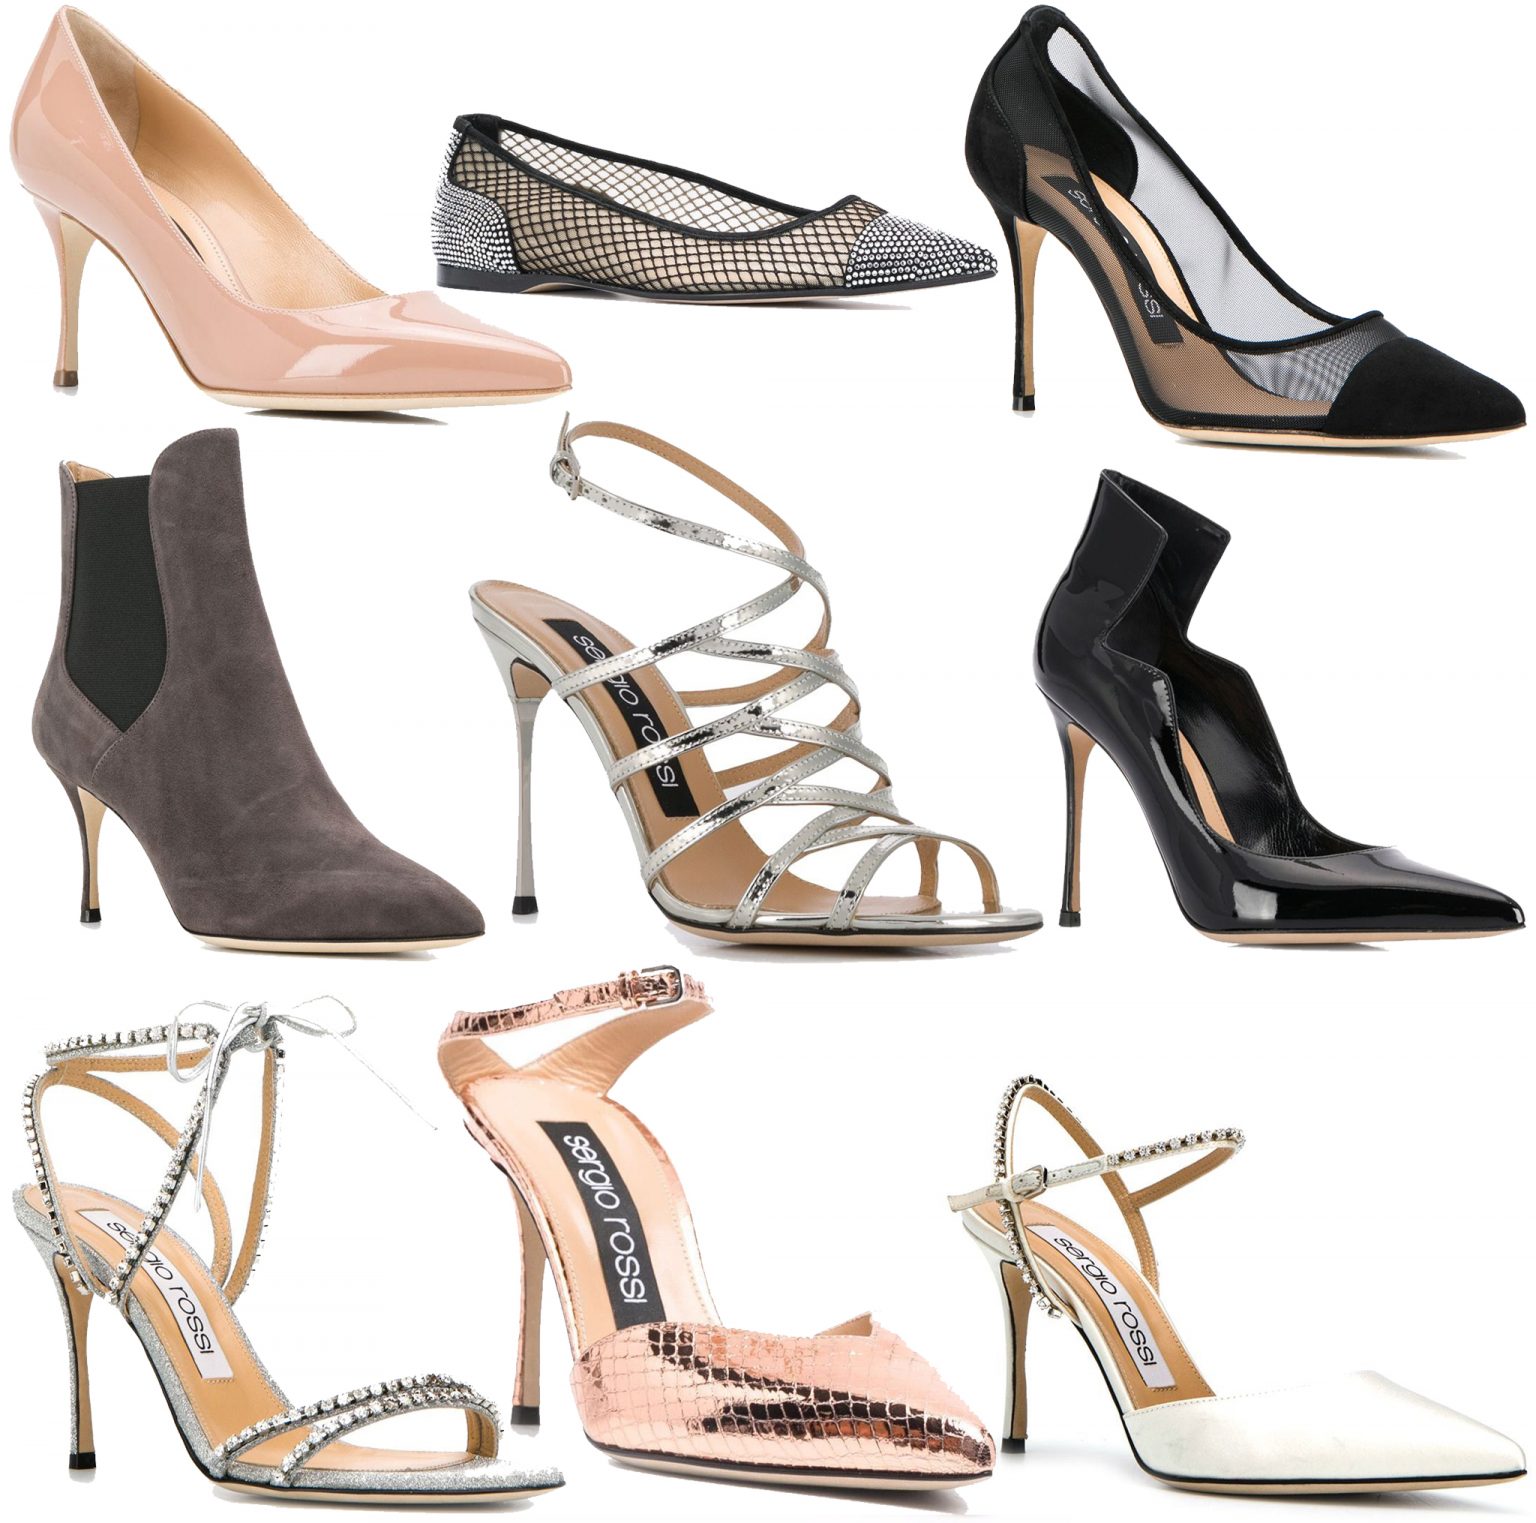 13 Most Popular Designer Shoe Brands for Women The Ultimate